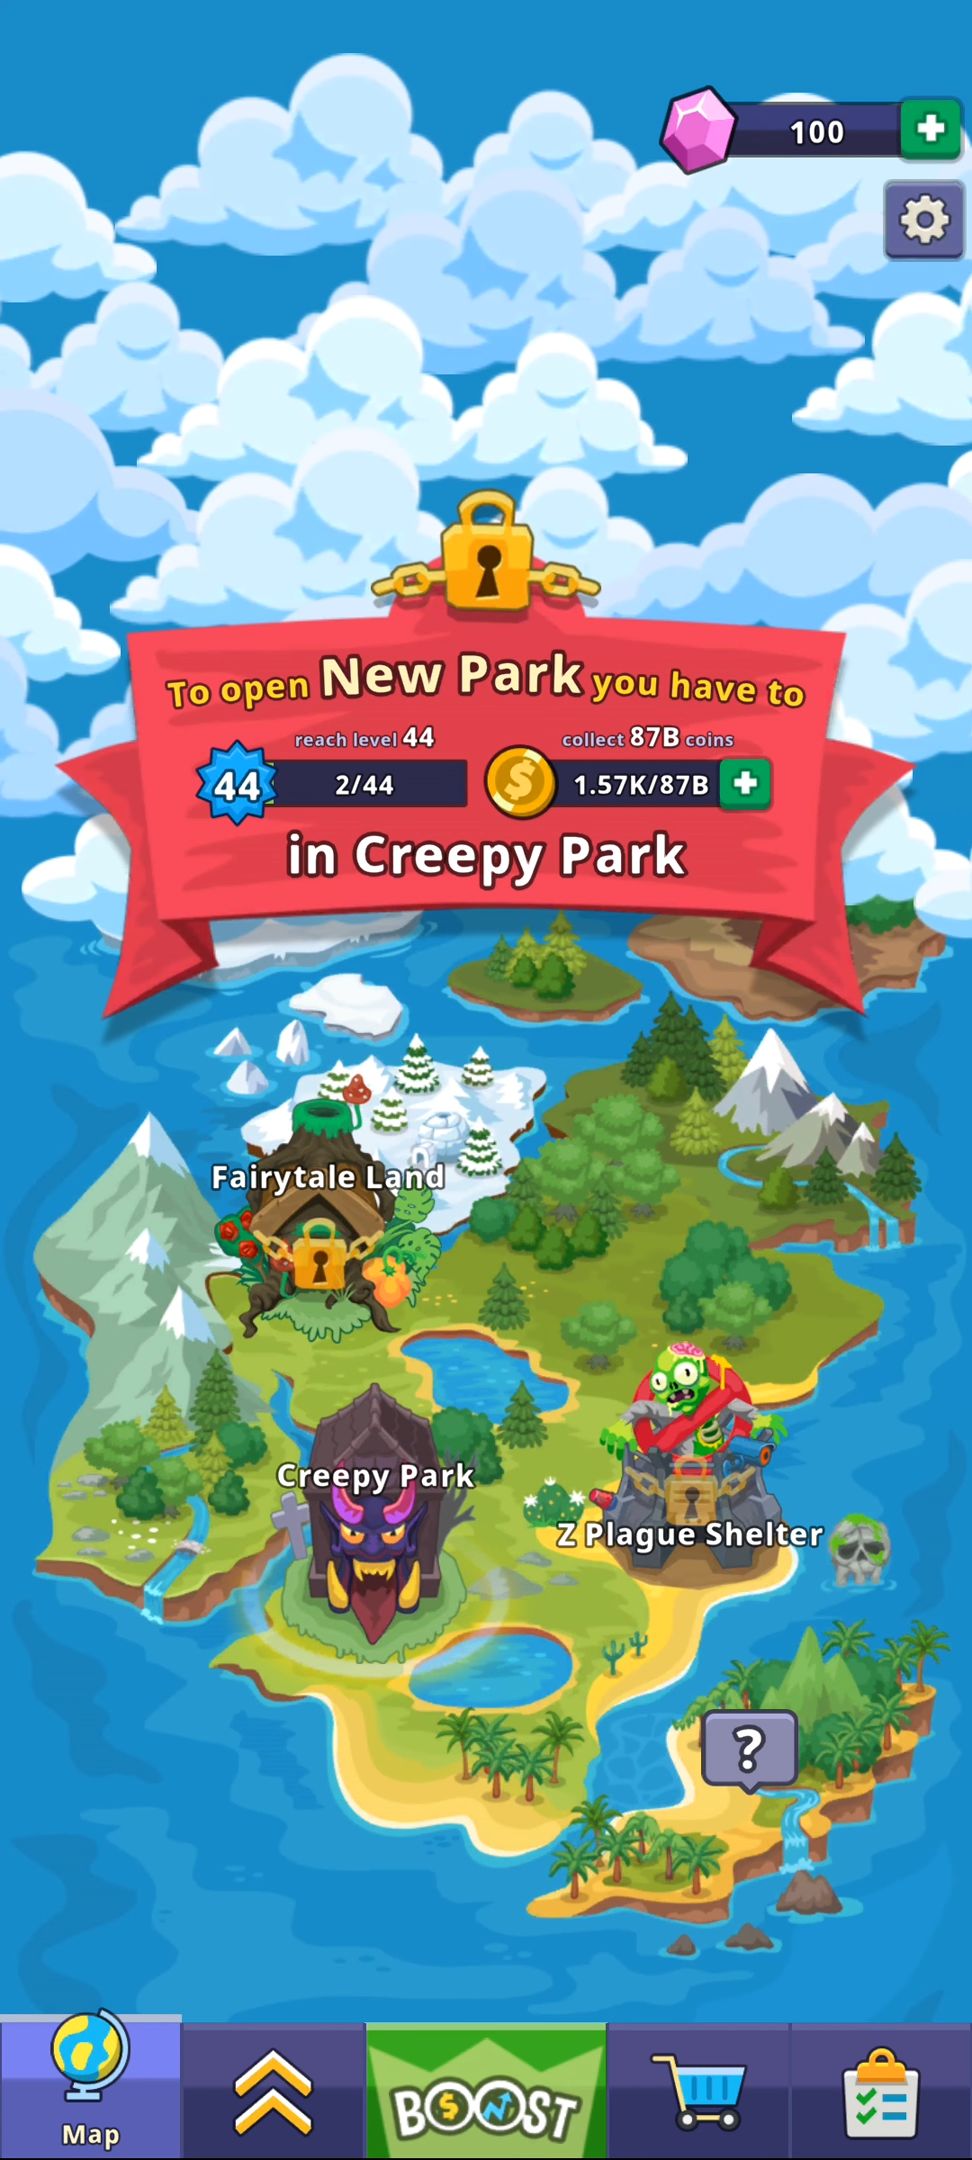 Idle Creepy Park Inc. - Android game screenshots.